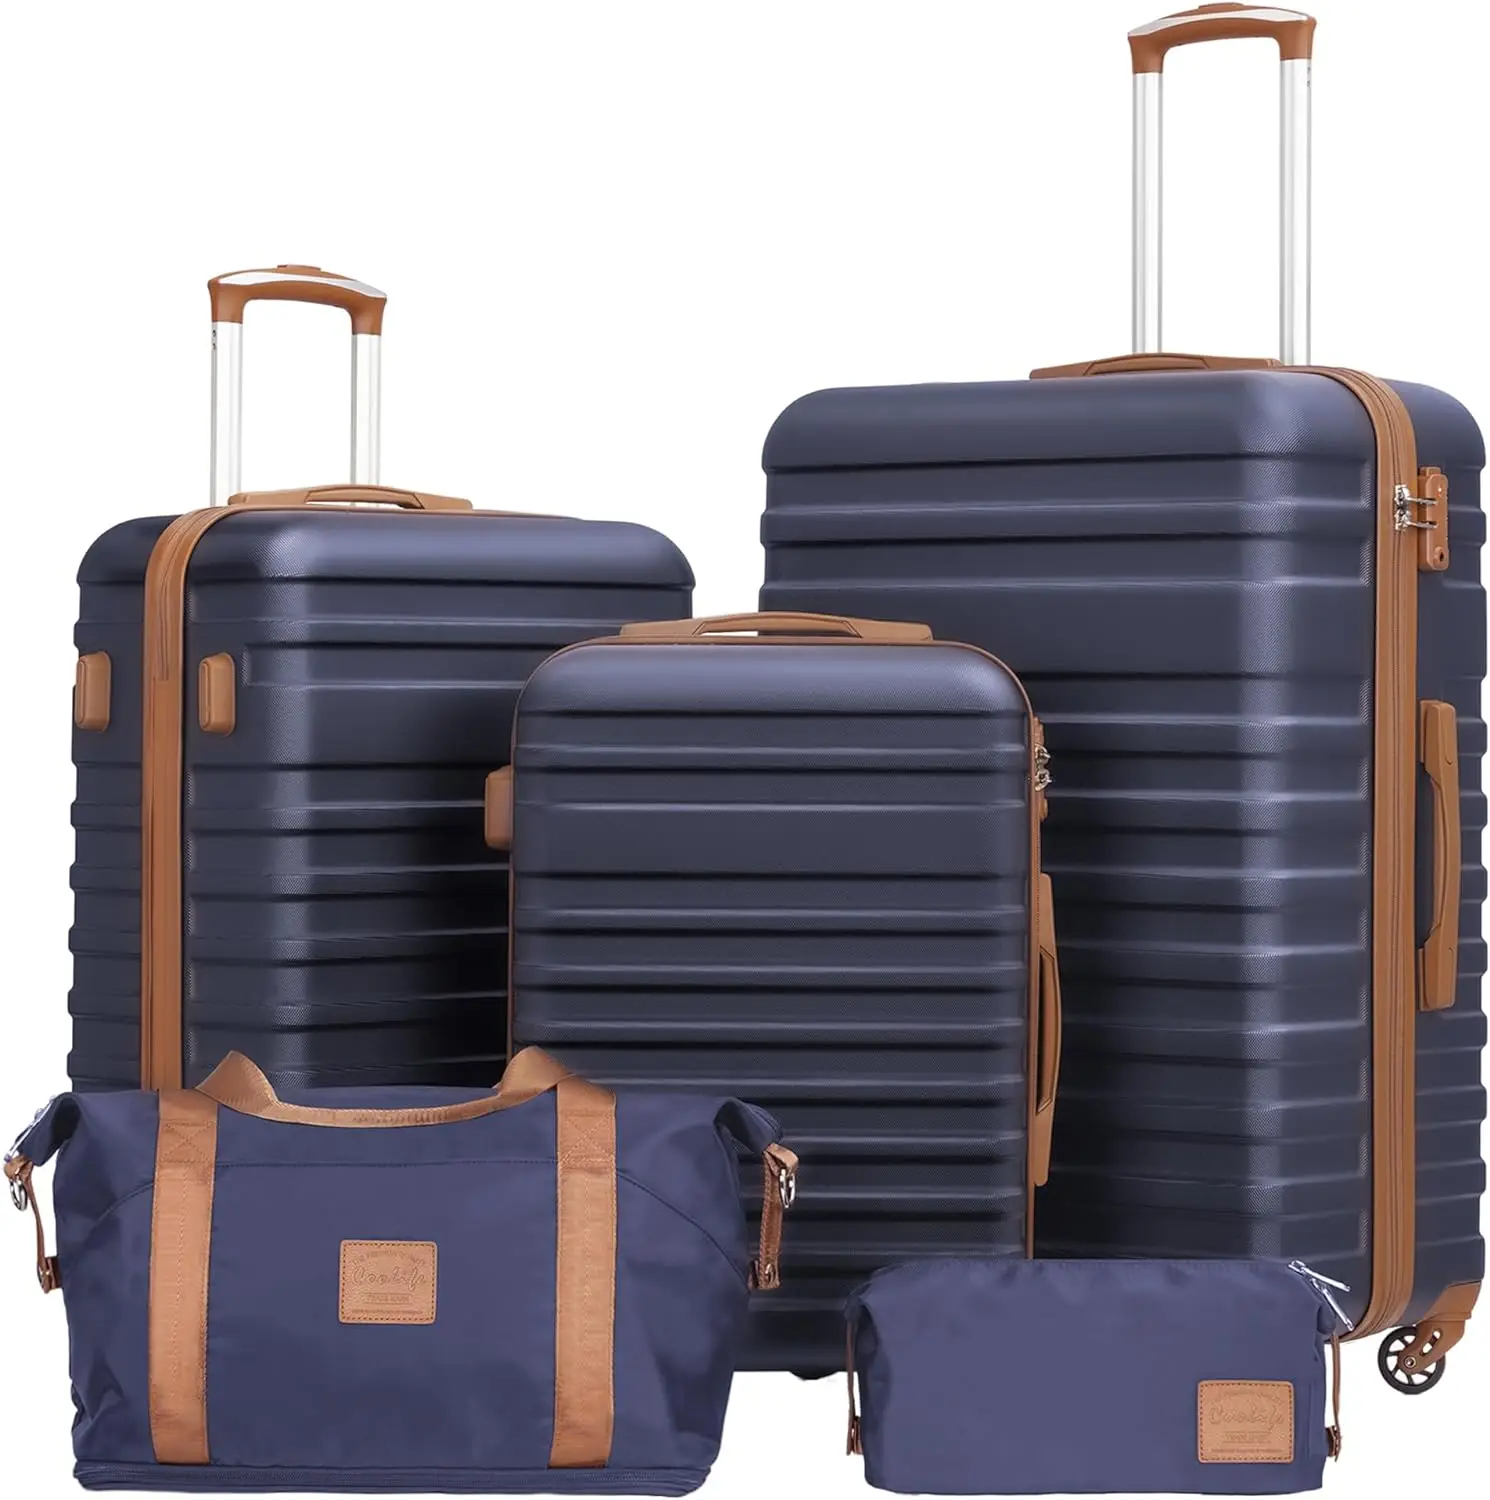 

Coolife Suitcase Set 3 Piece Luggage Set Carry On Hardside Luggage with TSA Lock Spinner Wheels (Navy, 5 piece set)